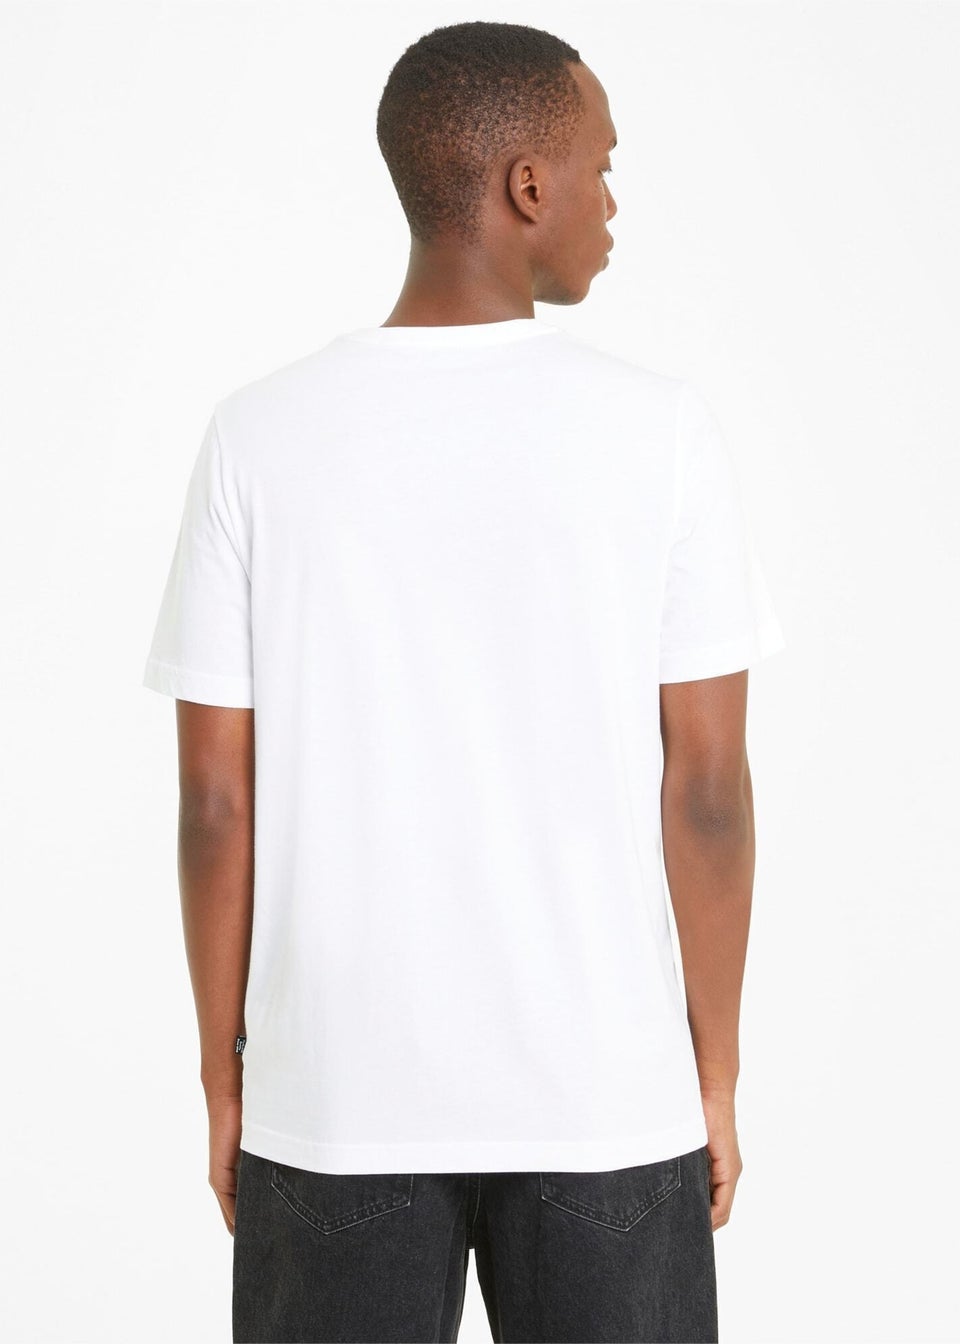 Puma White Logo T-Shirt